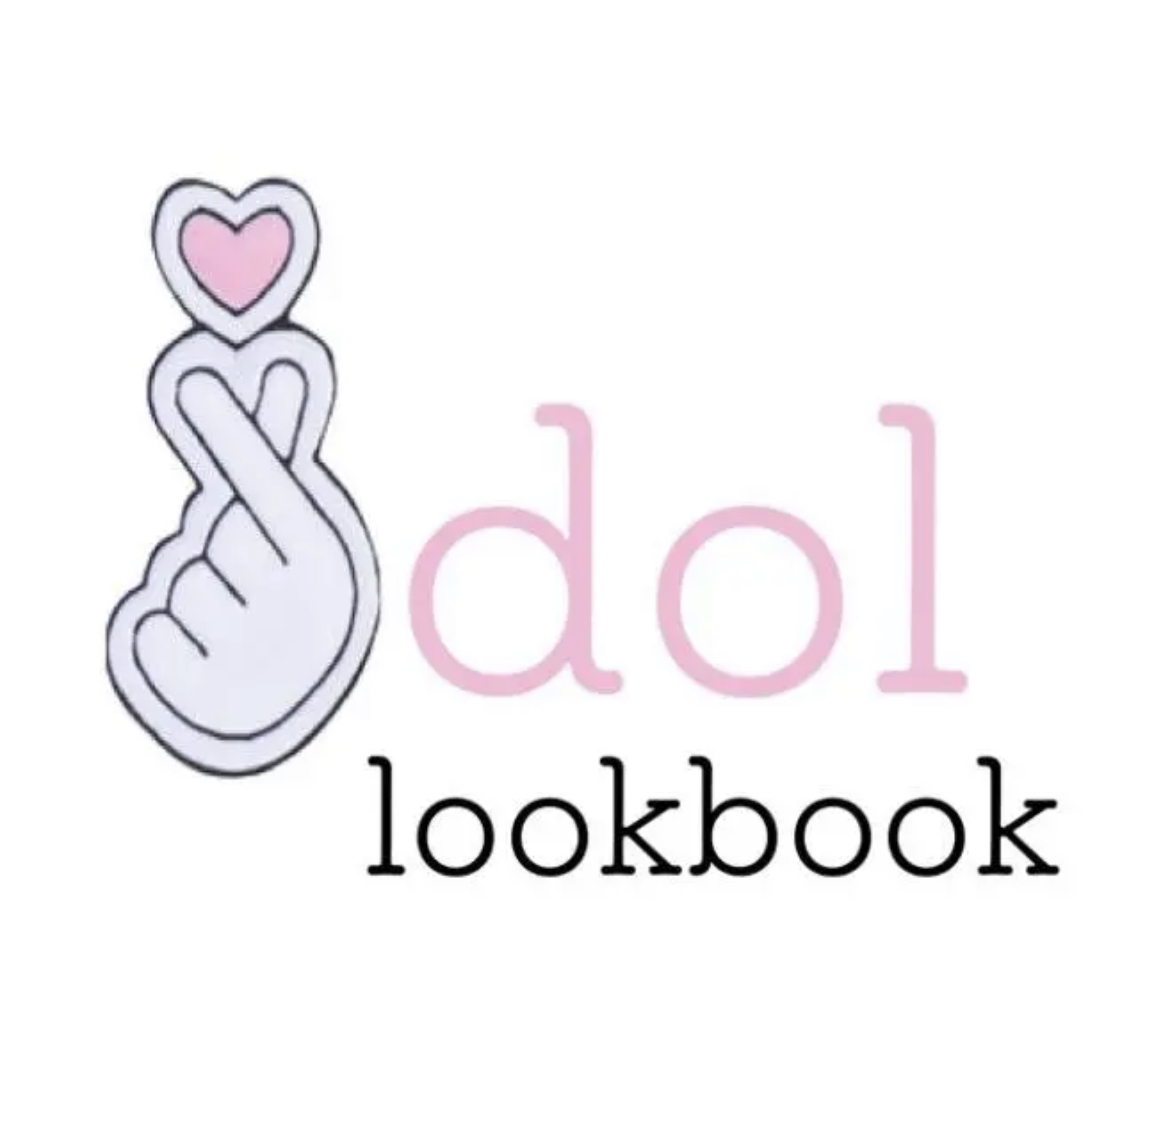 Idol Lookbook